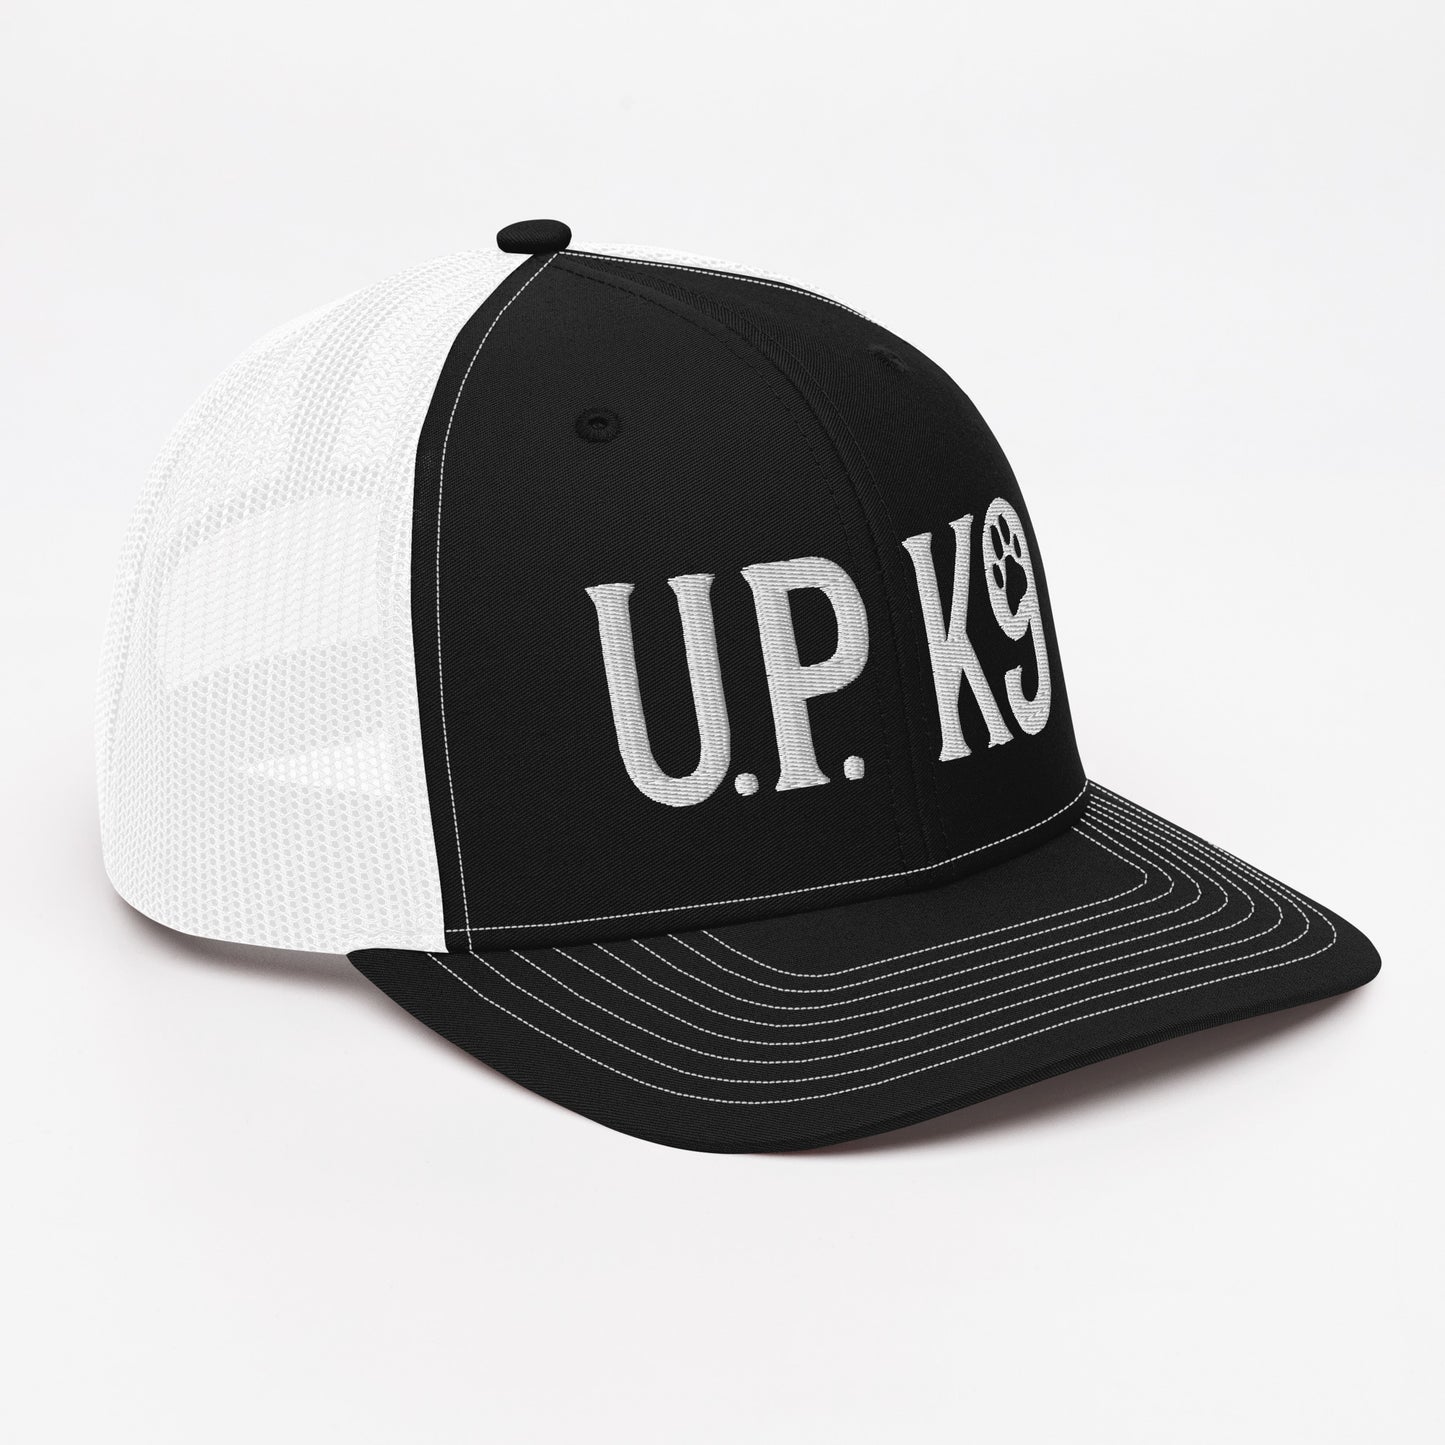 UPK9 Hat